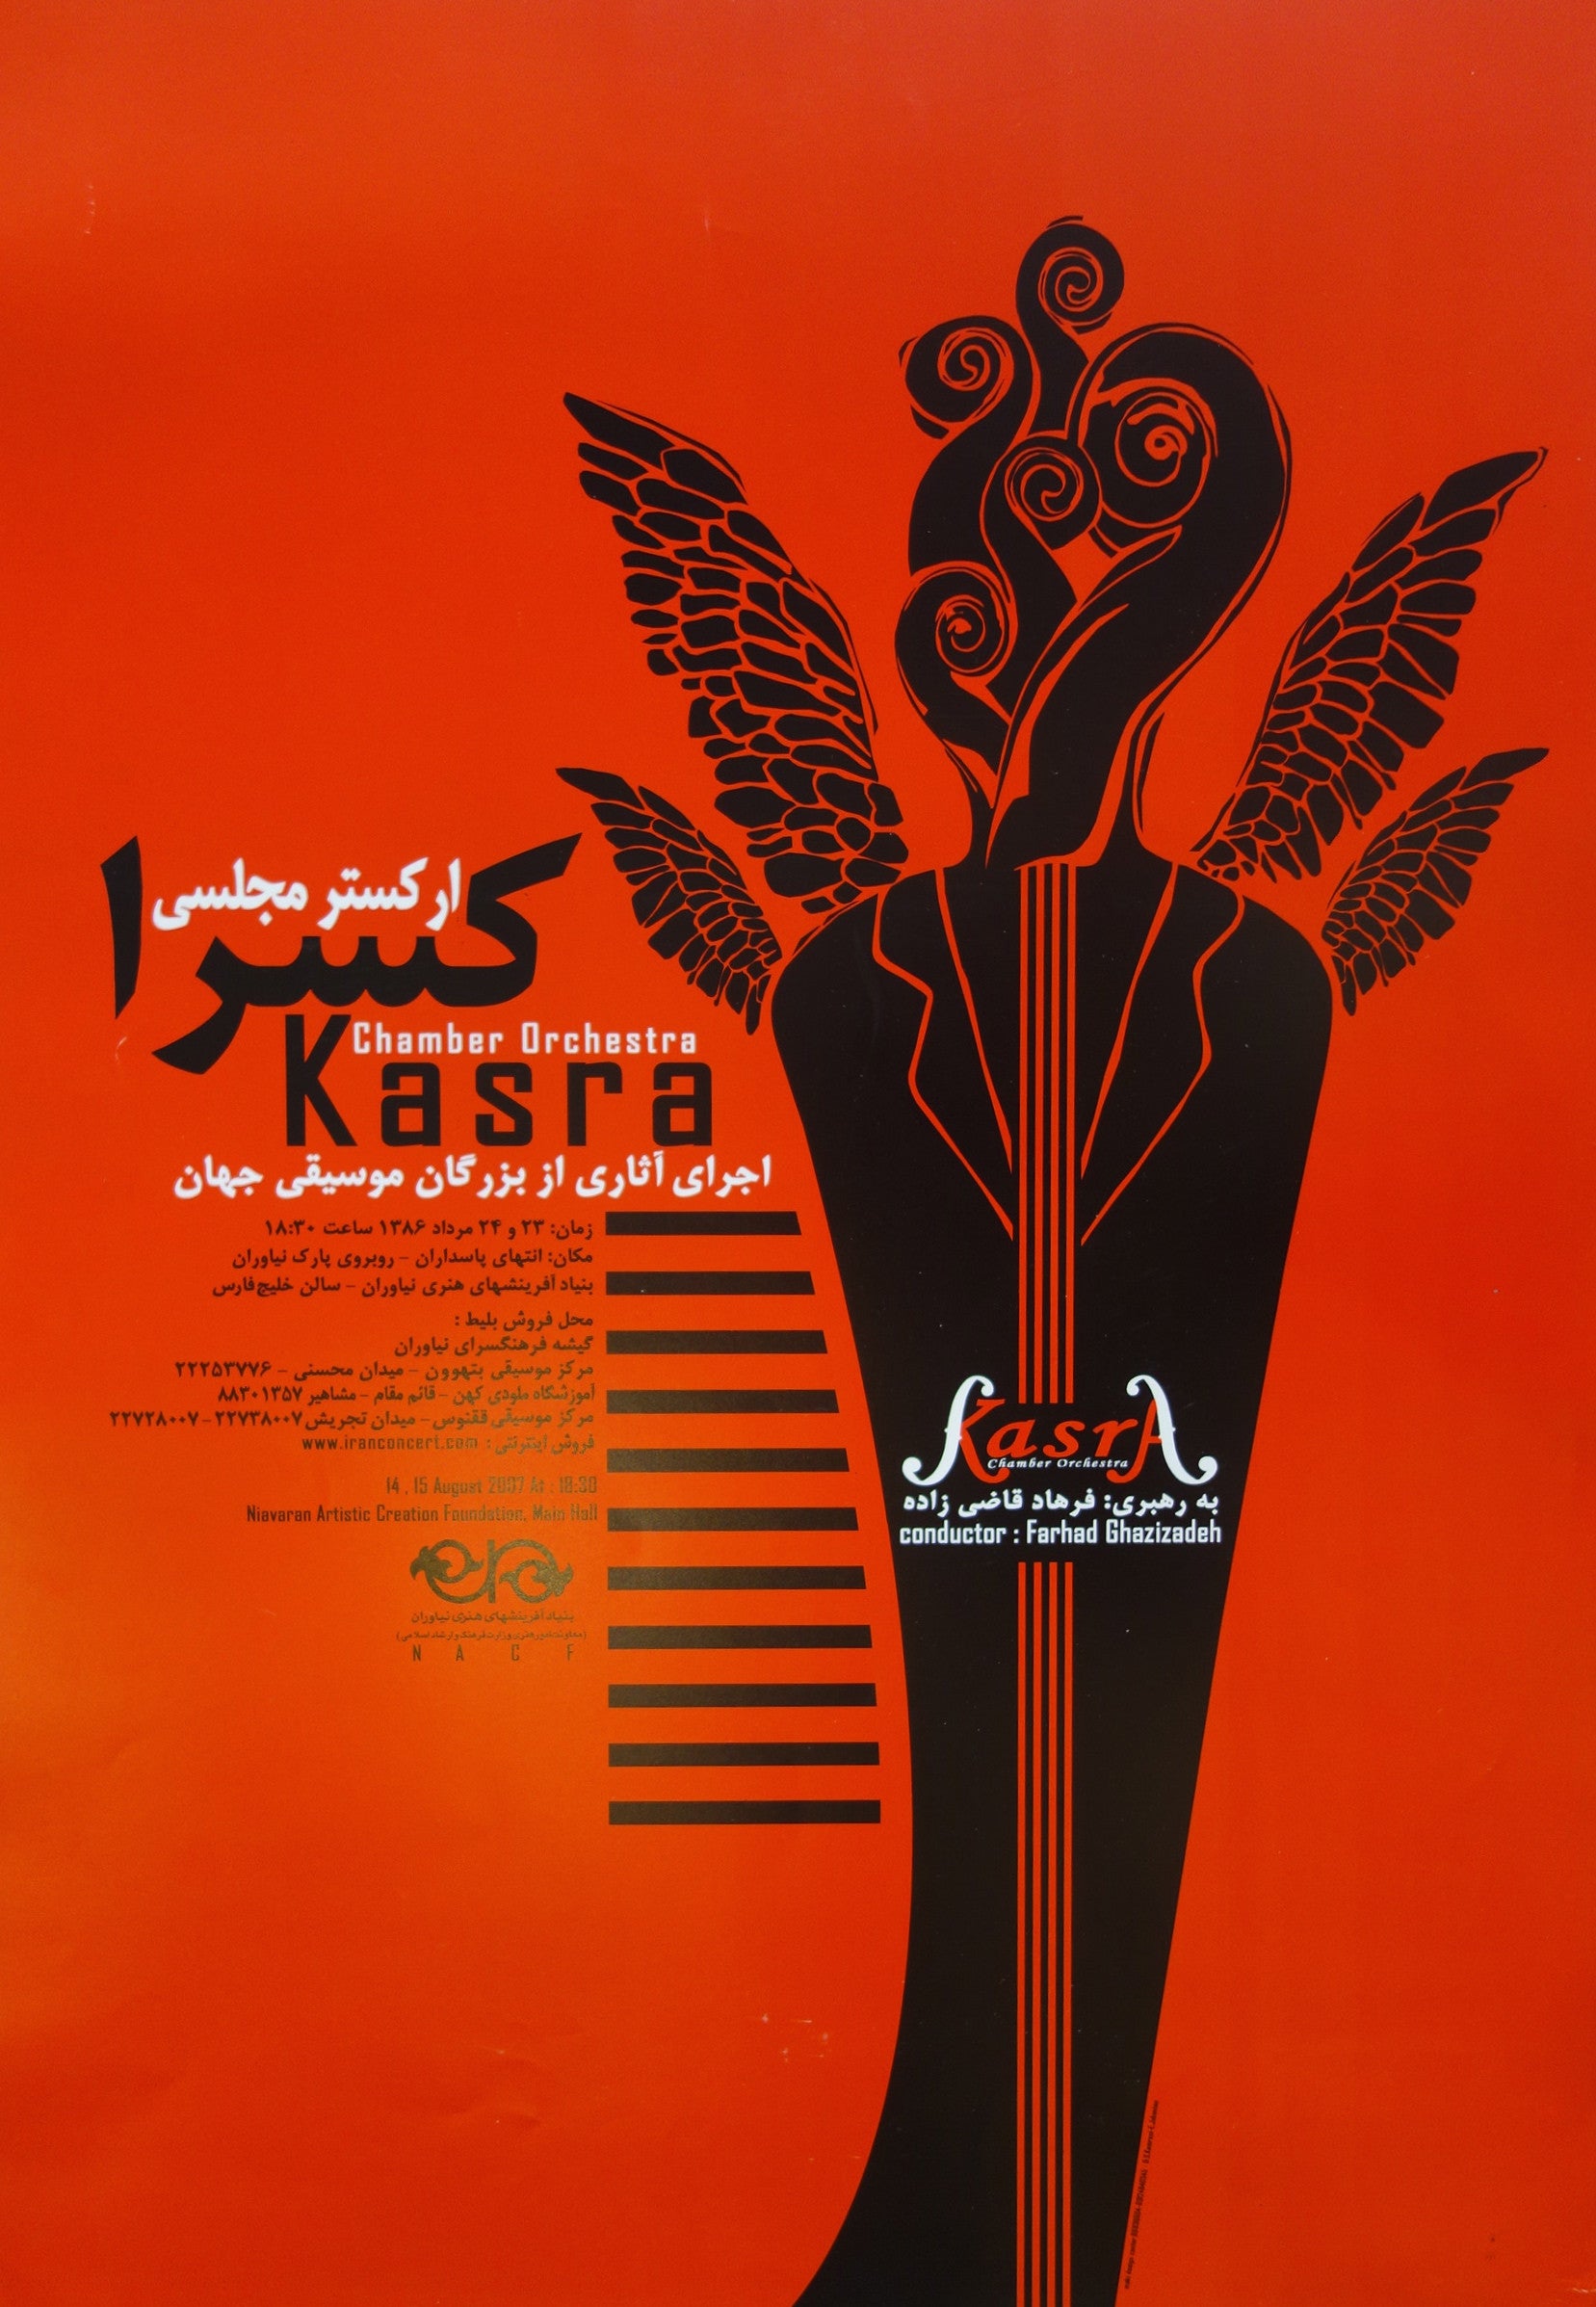 Kasra Chamber Orchestra